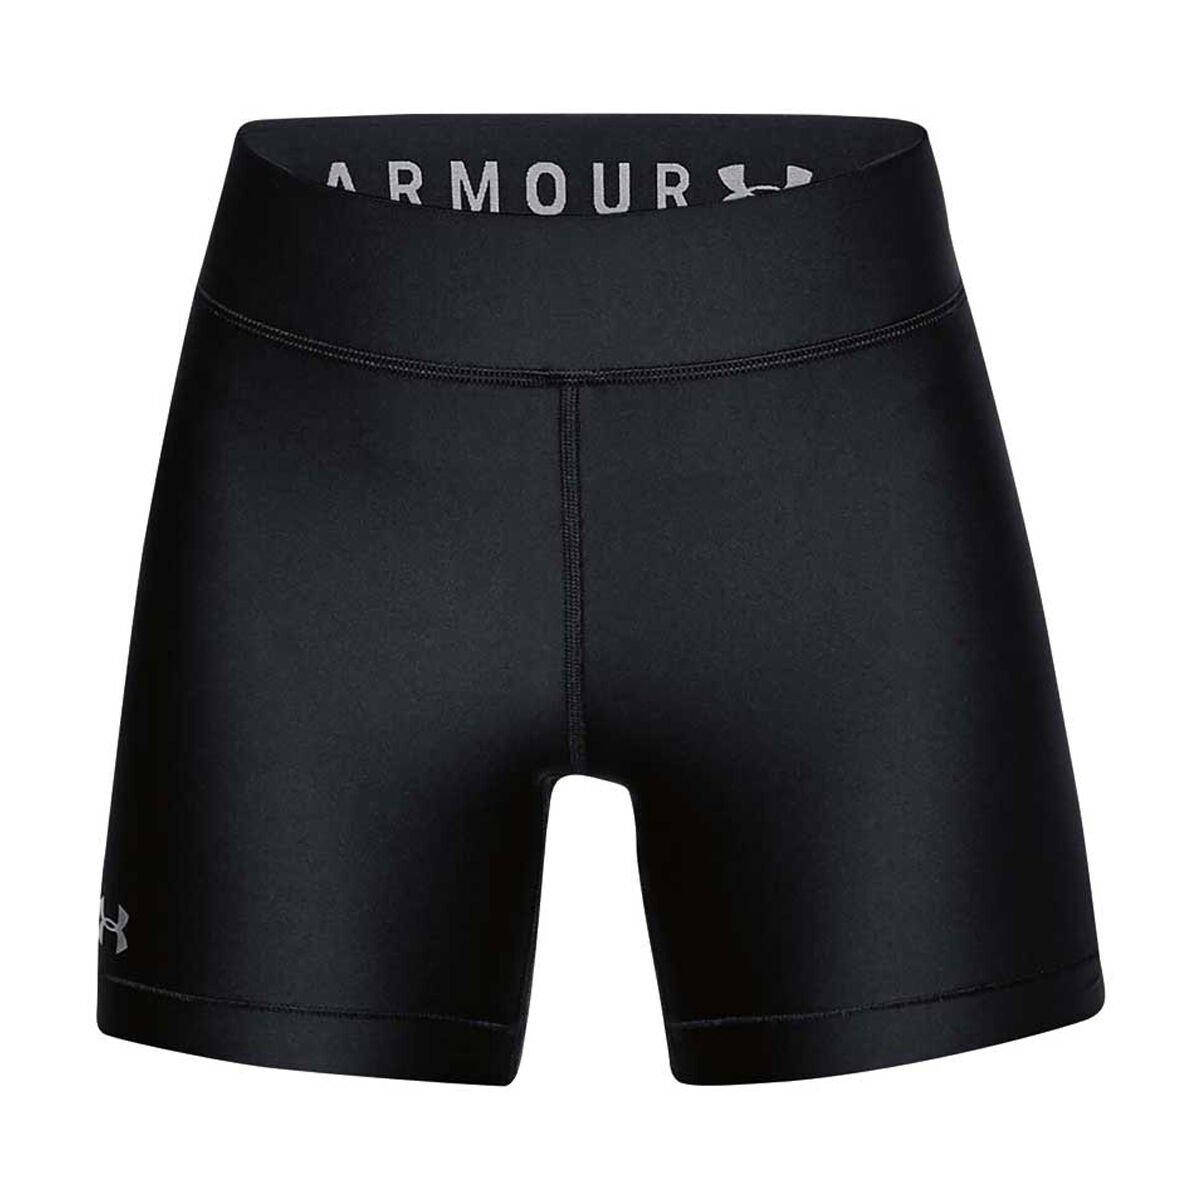 Under Armour Women's XS Gray Shorts Heatgear